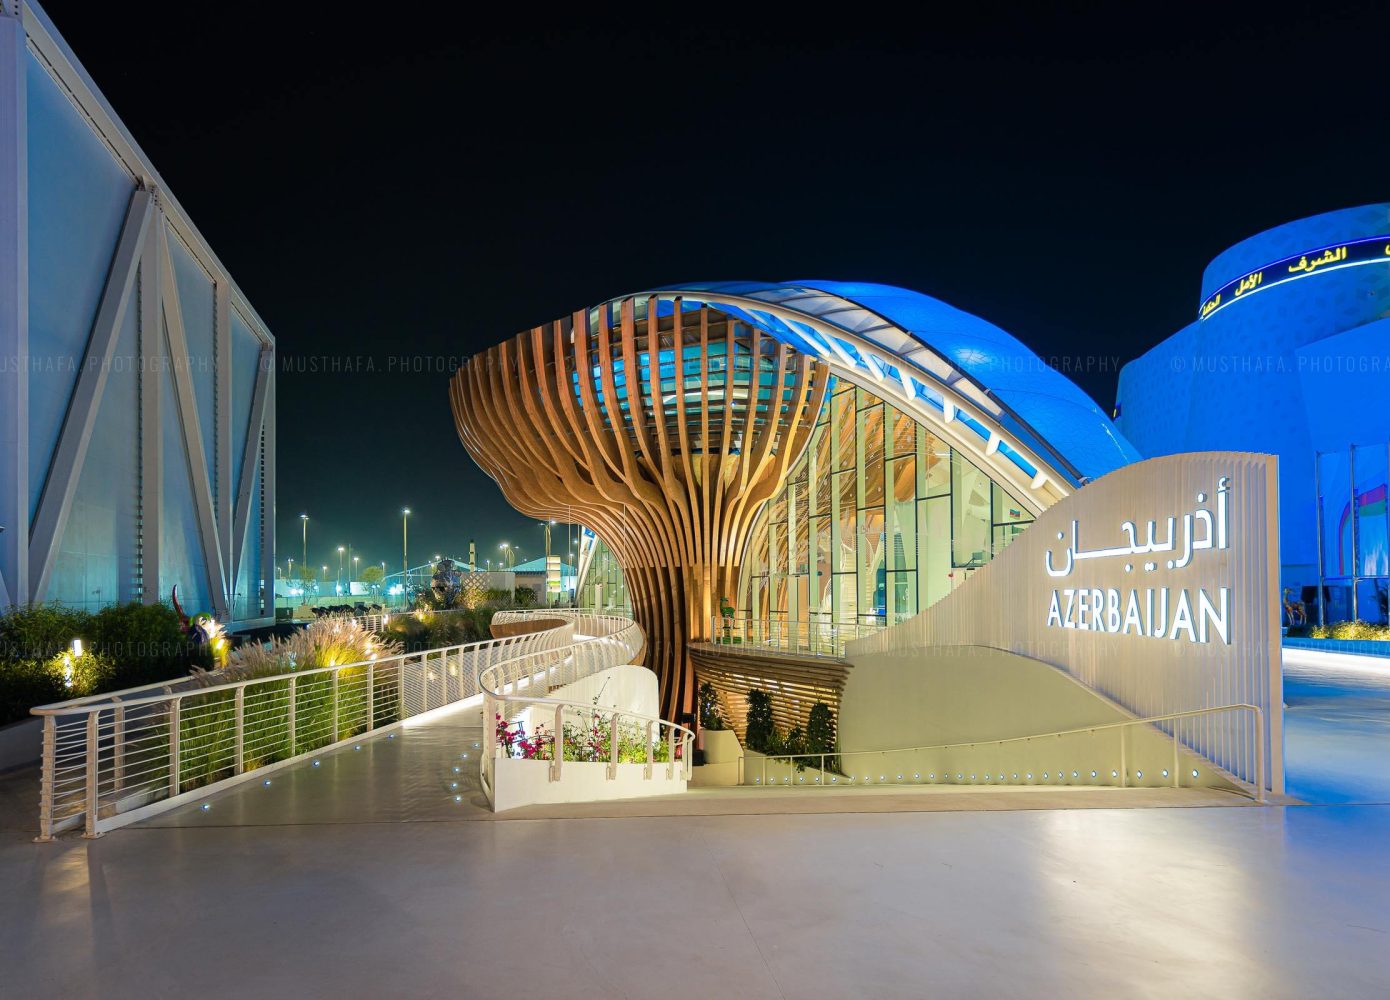 Azerbaijan Pavilion Photography Expo 2020 Dubai Photographer Architecture Interior 01